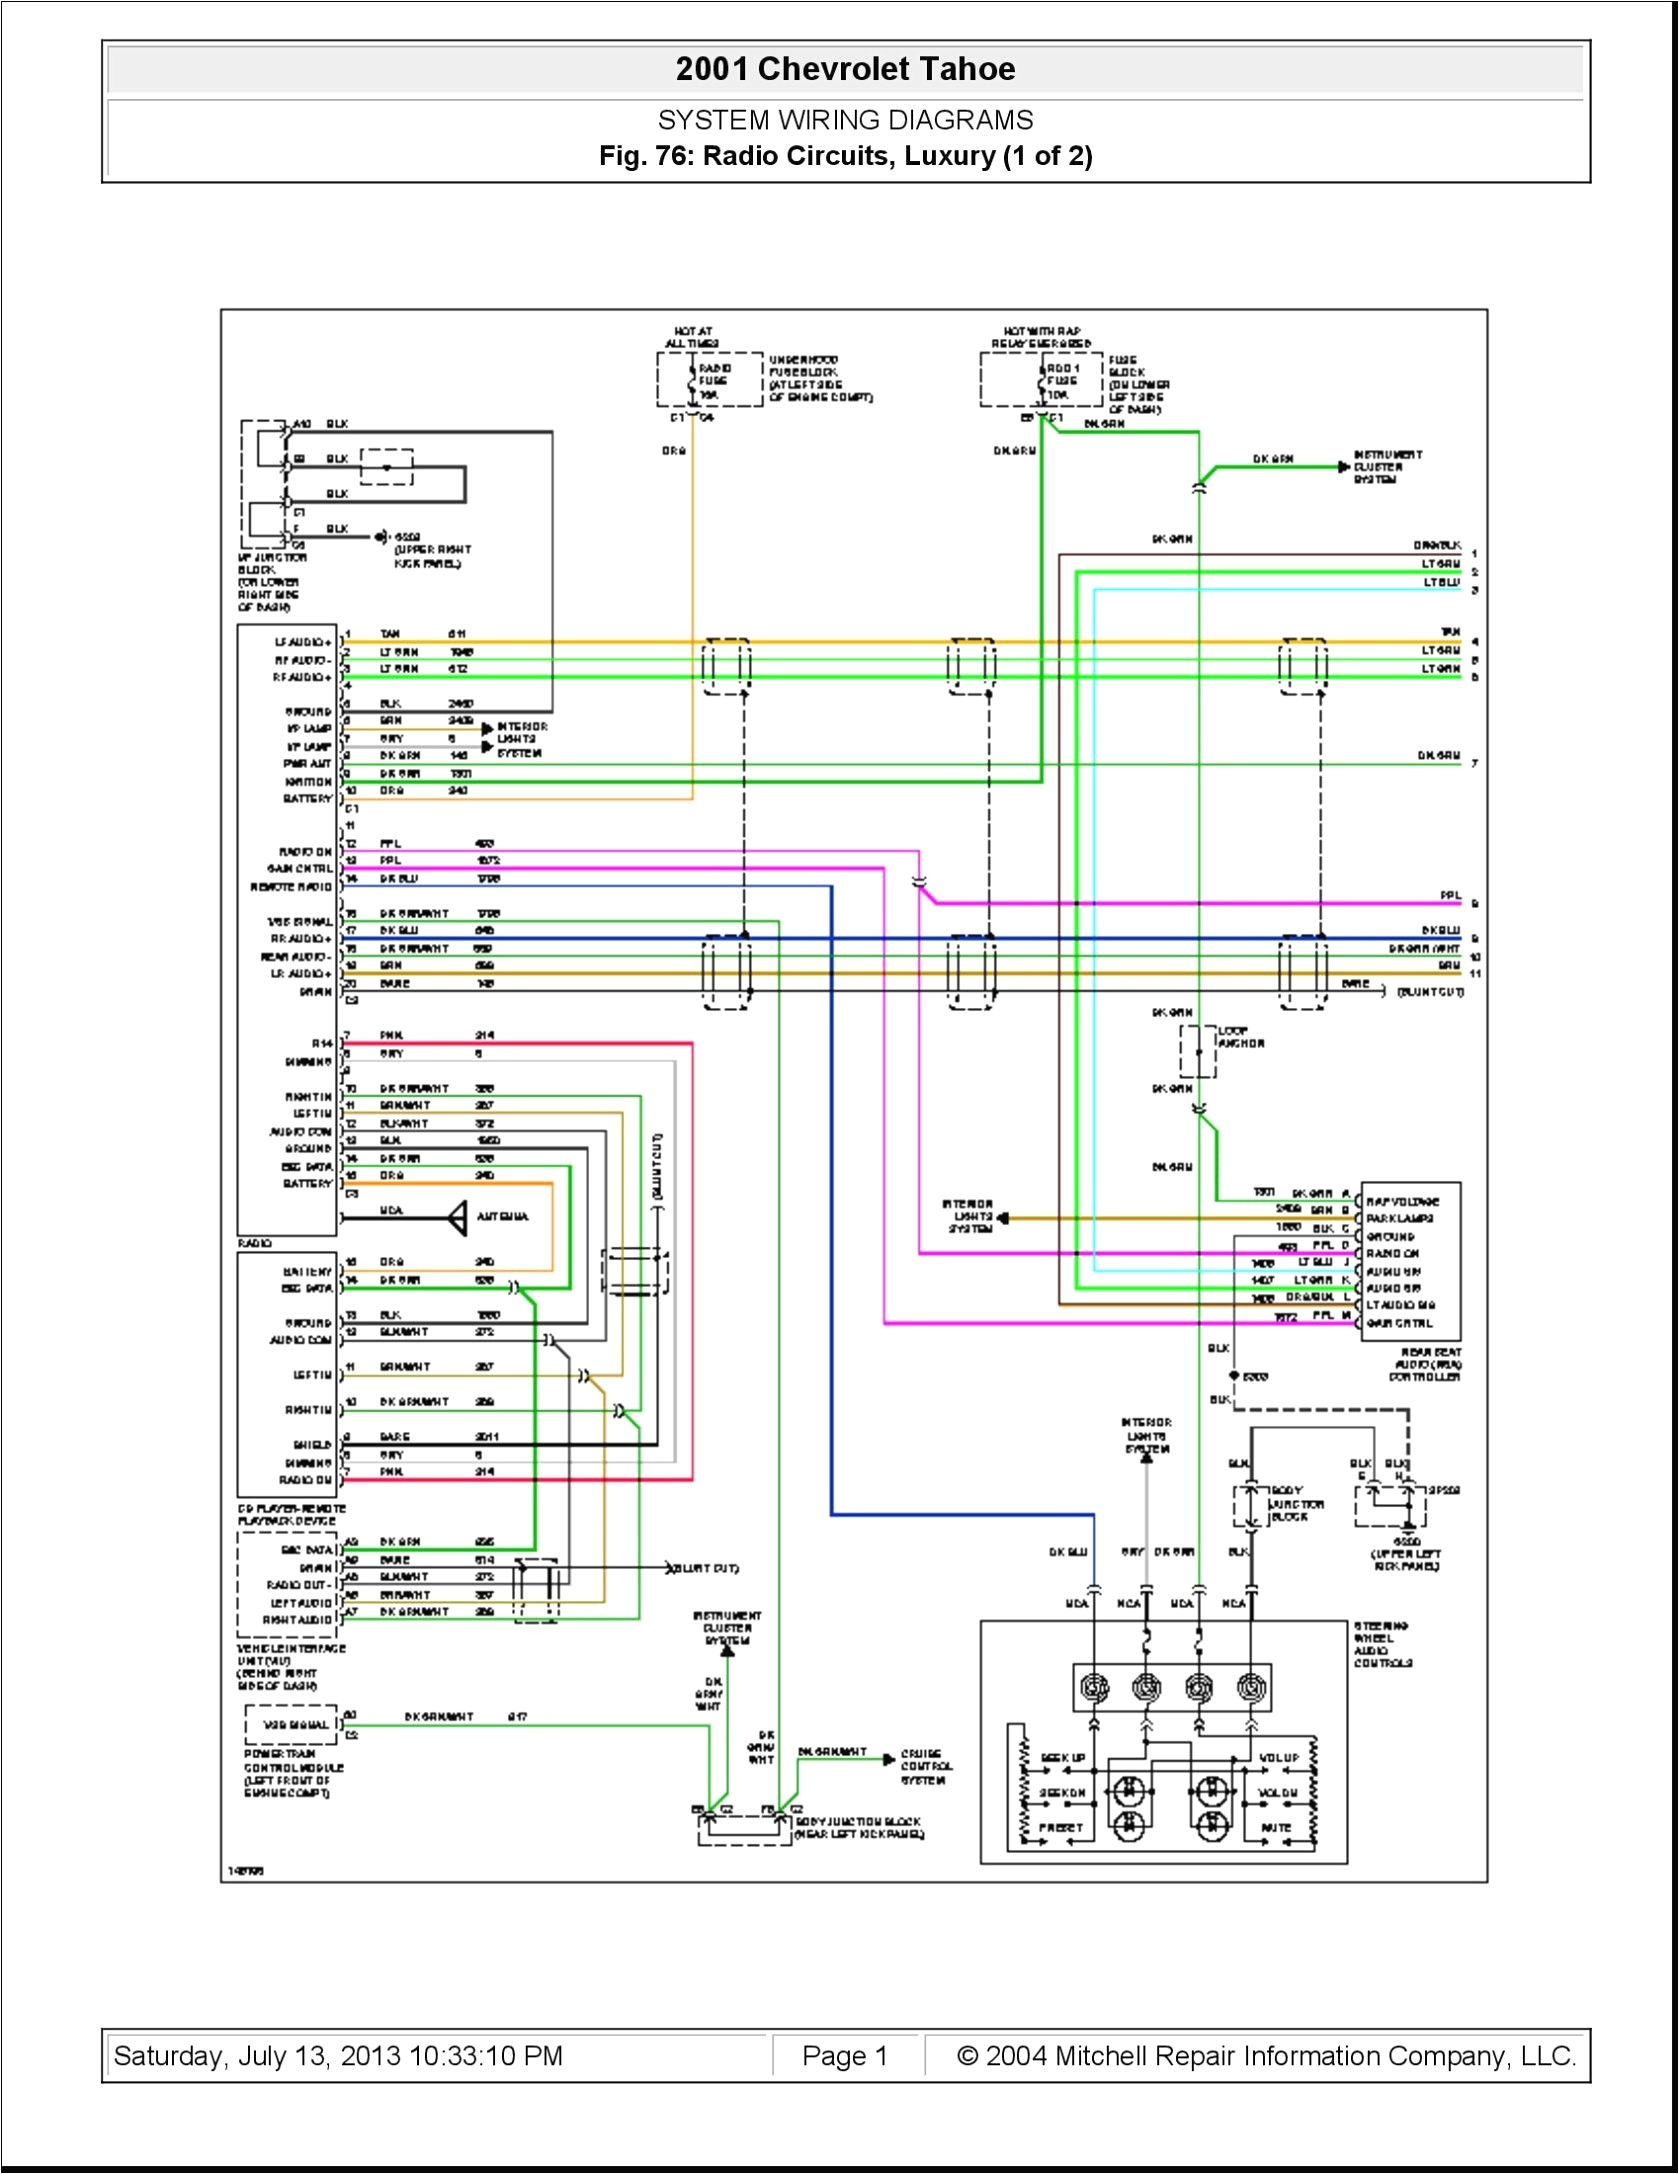 2002 silverado wiring diagram pdf wiring diagram expert 2002 silverado wiring diagram pdf